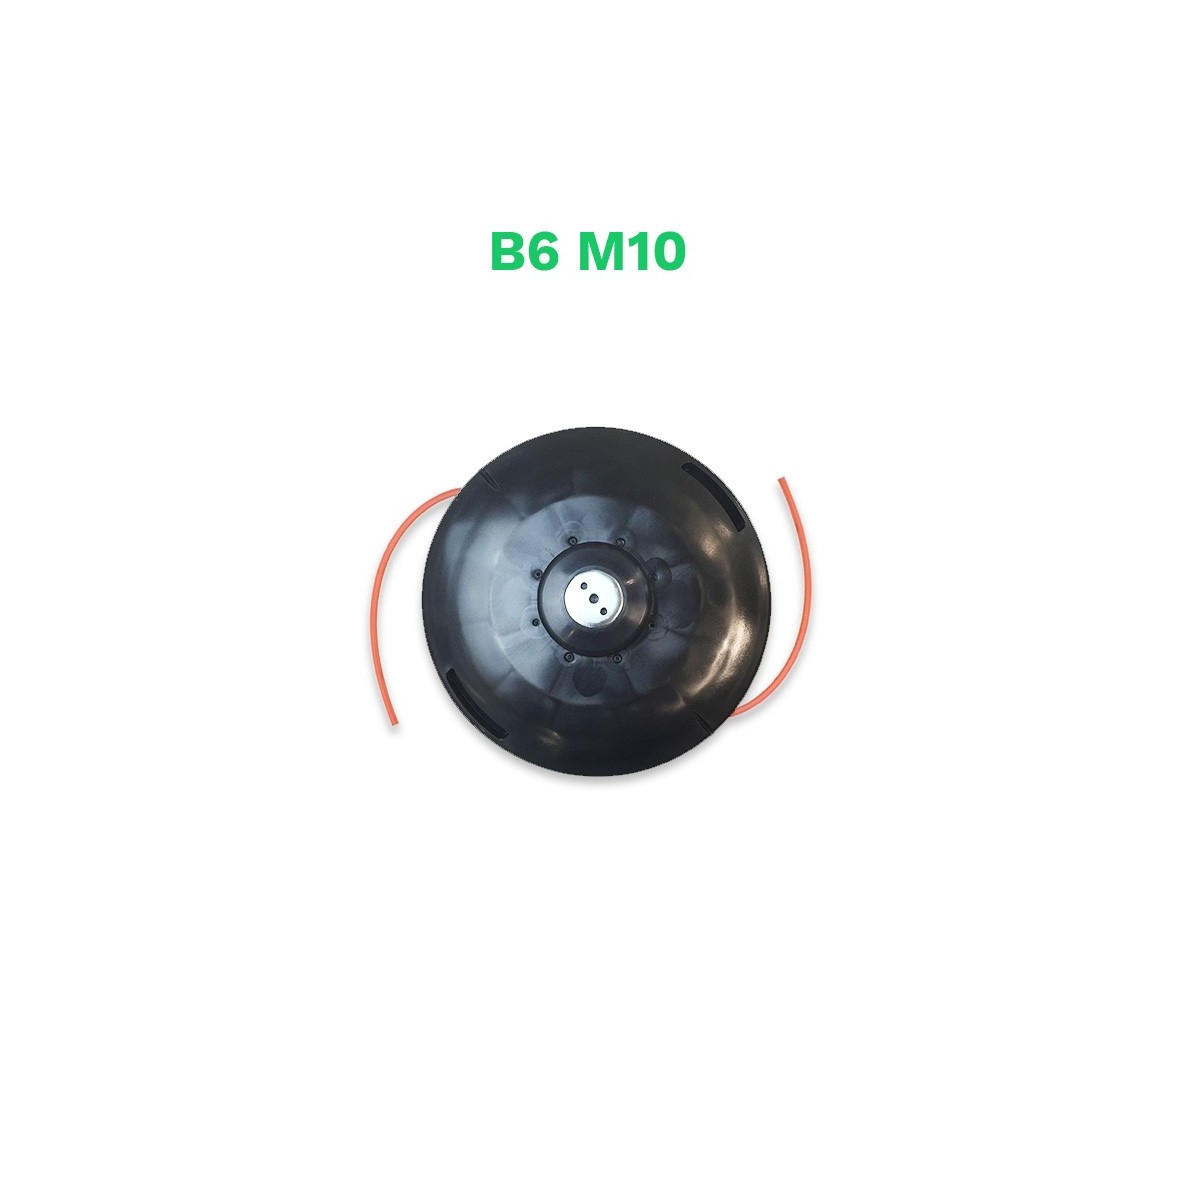 Echo cabezal semiautomatico b6 m10 (x047-001120)